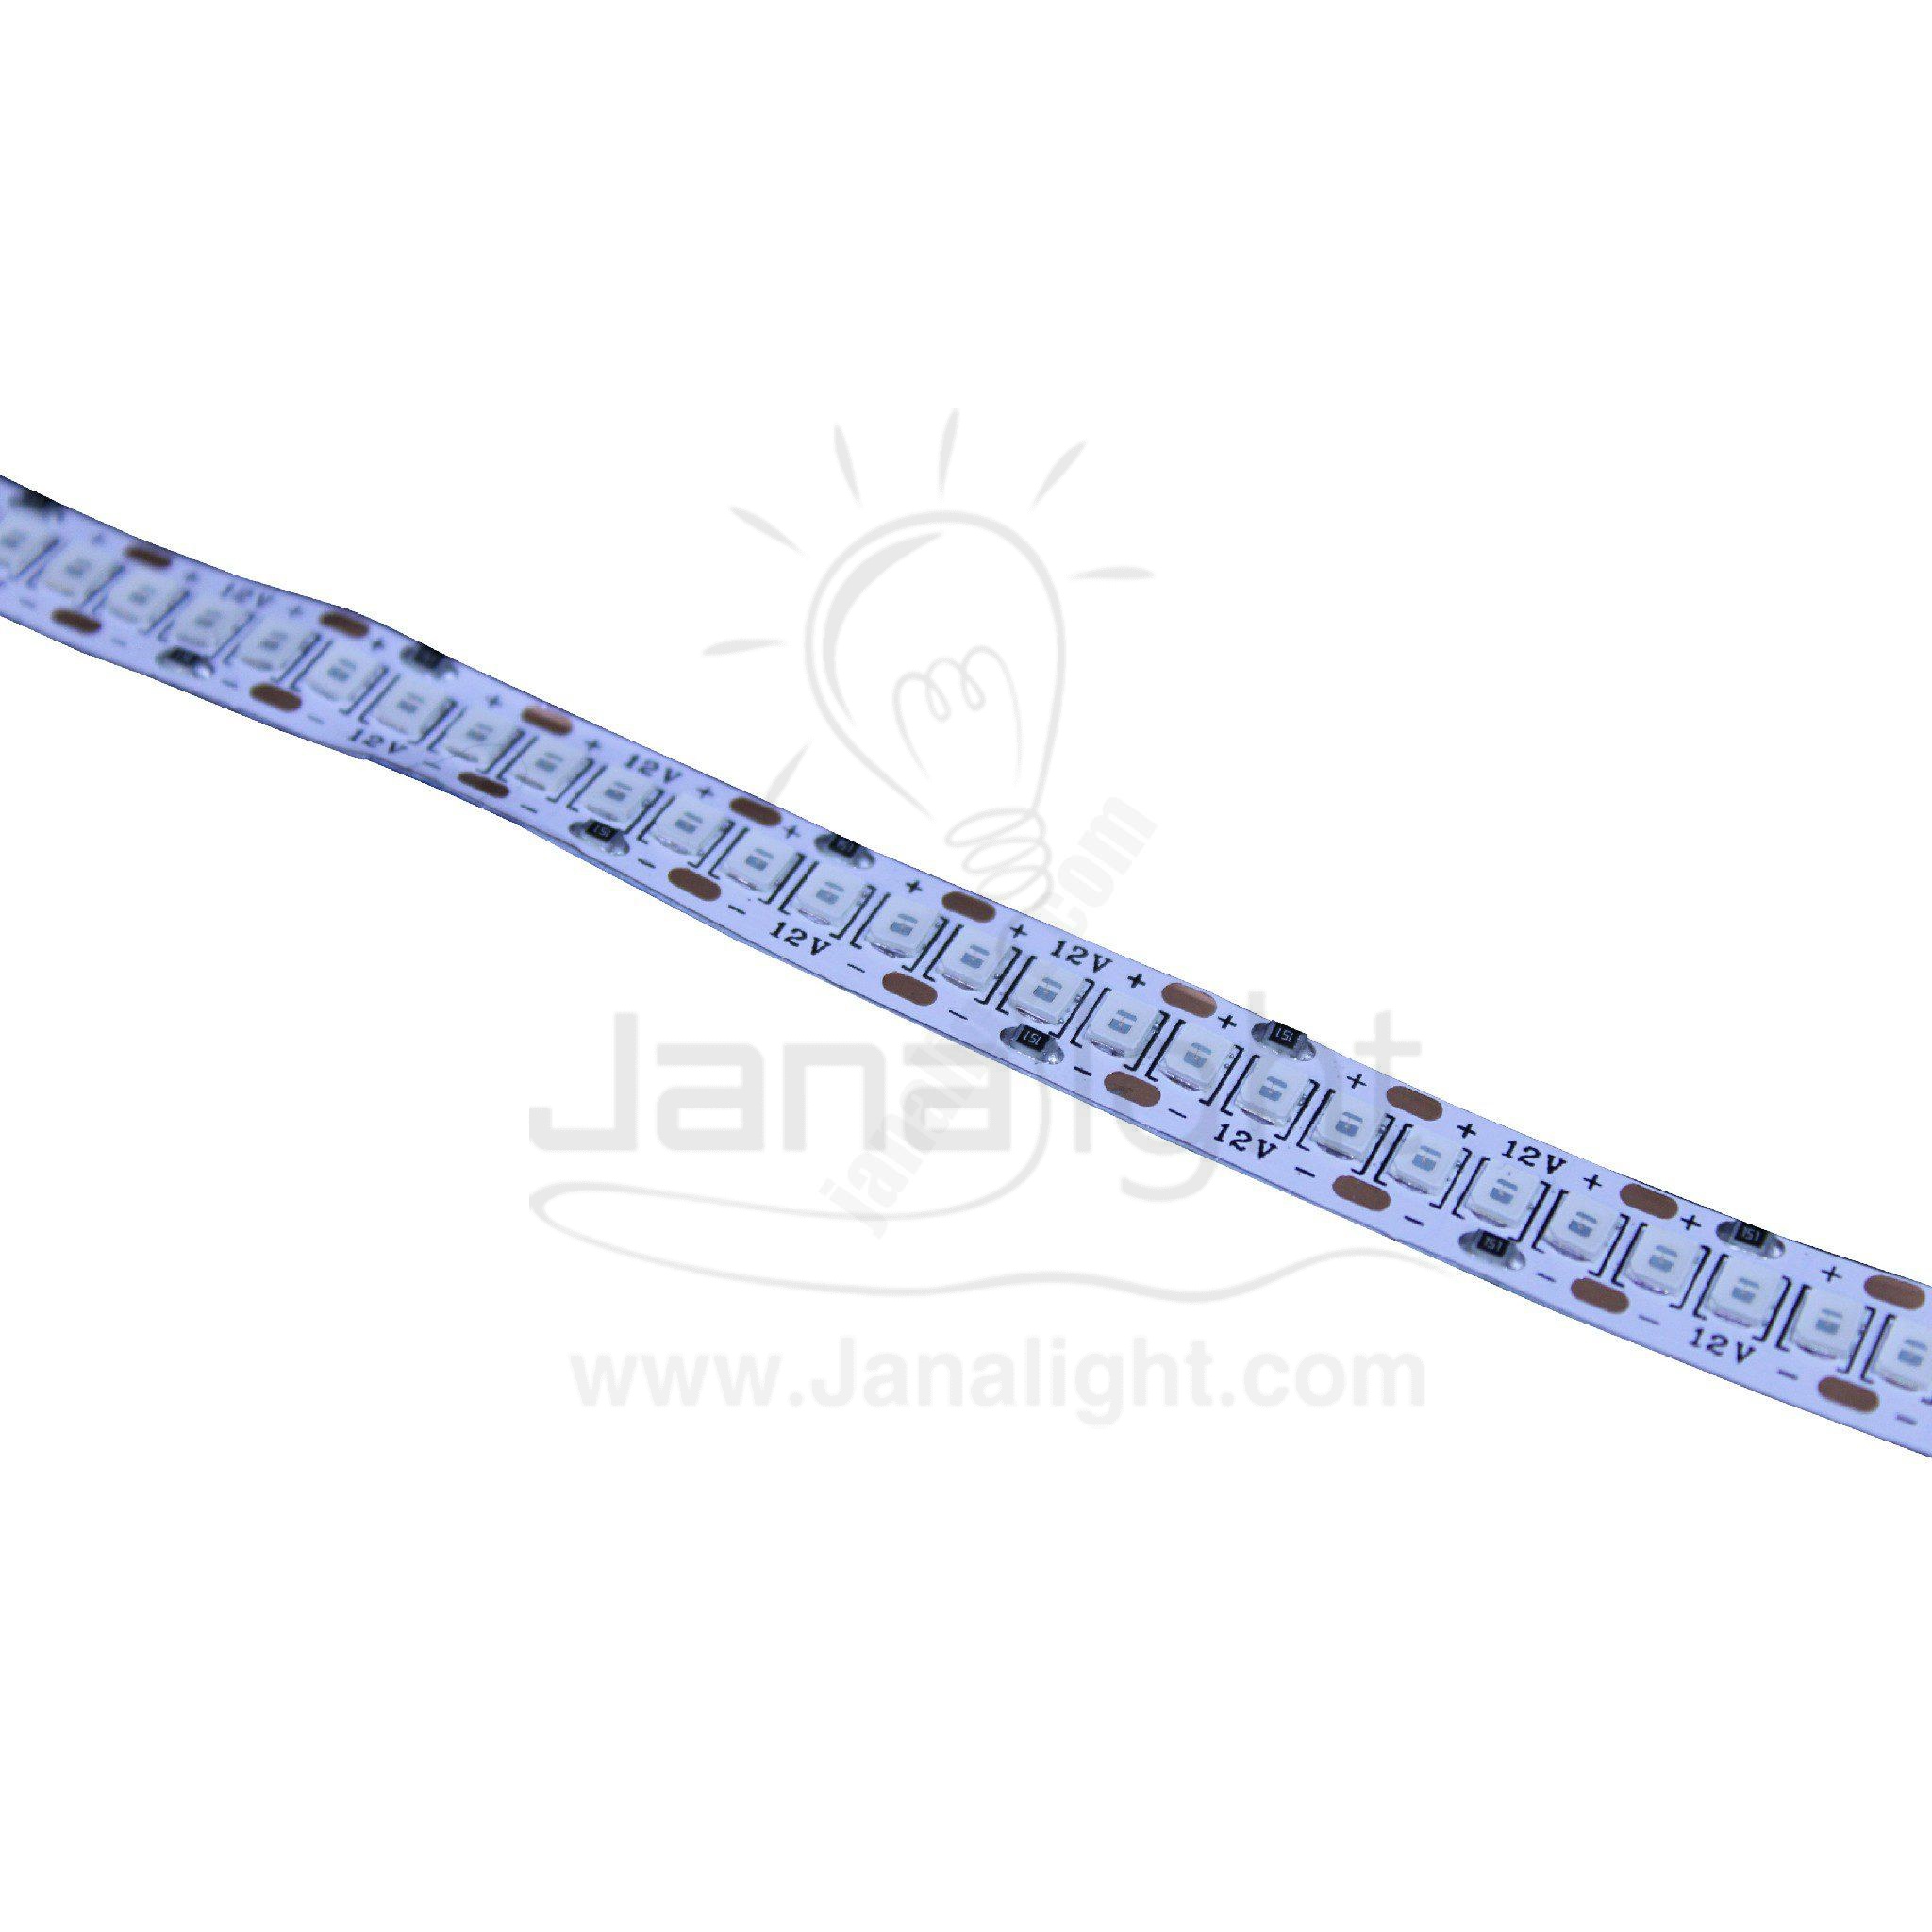 شريط لد 12 فولت 5 متر 240 لد ازرق بروفايل led tape profile 12v 5m 240 led blue